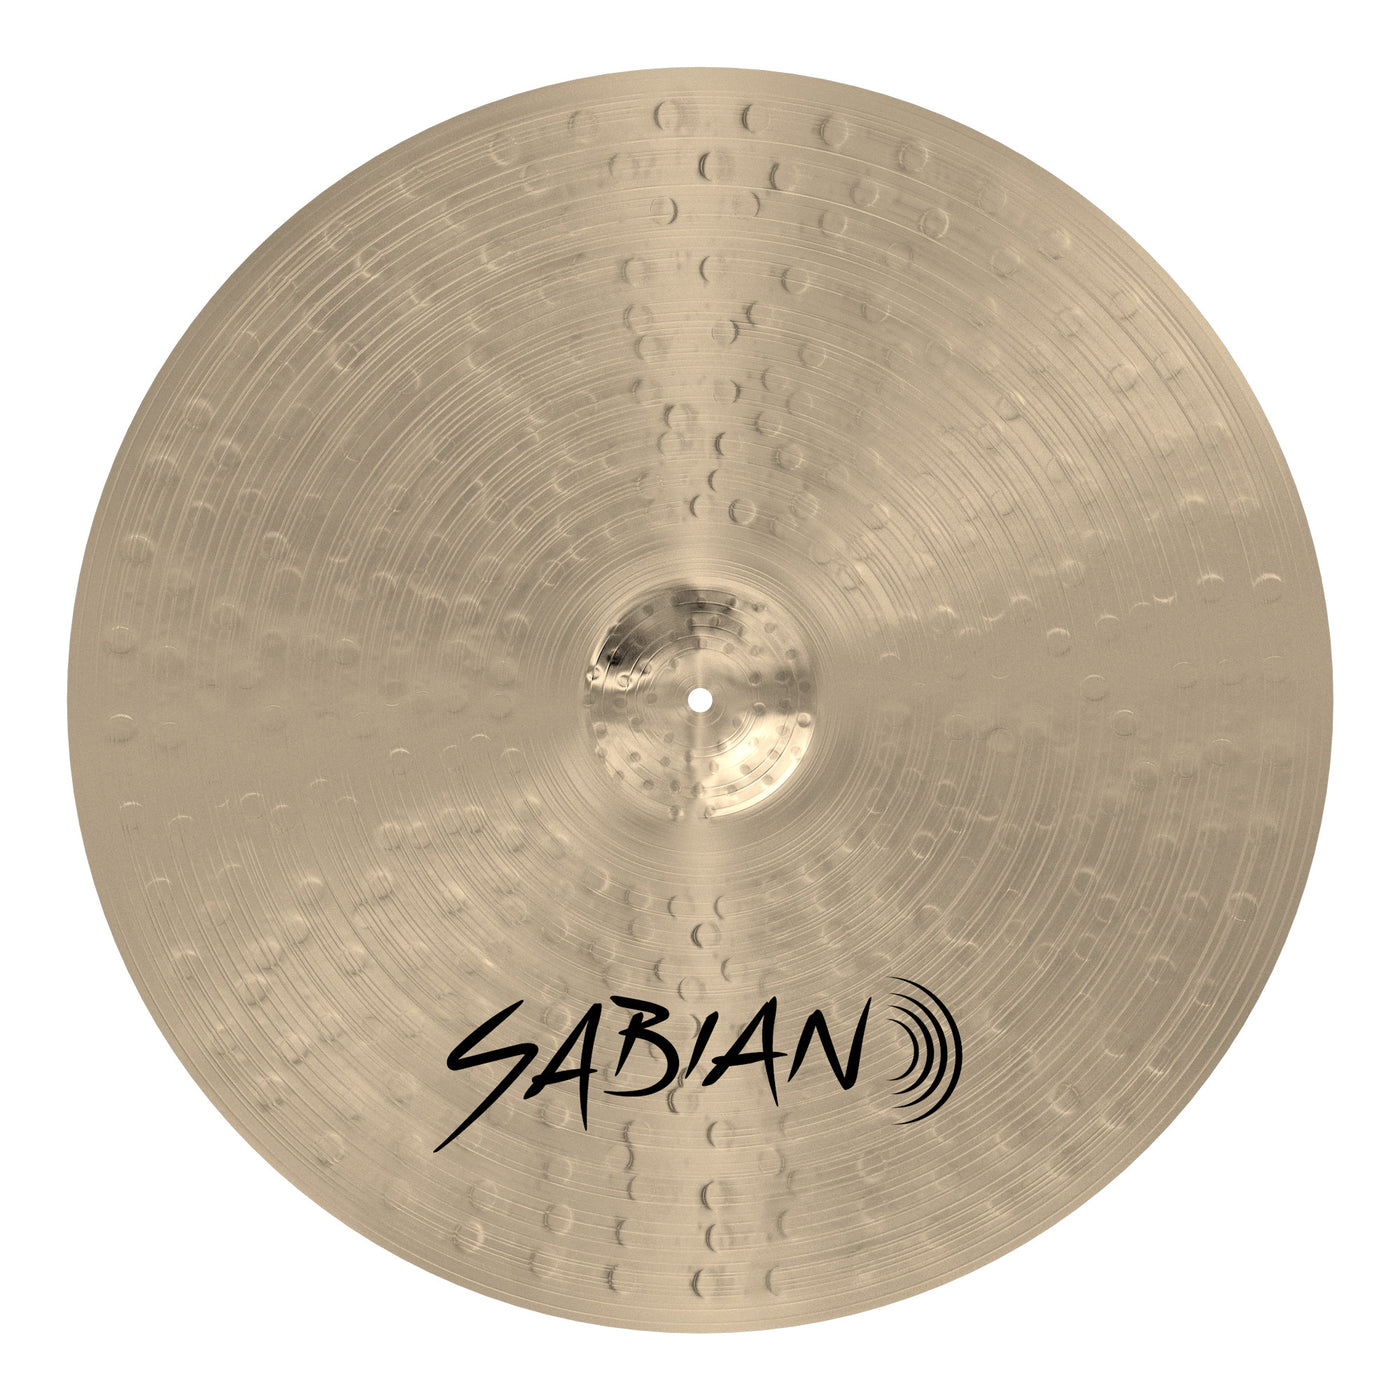 Sabian Stratus 22-Inch Ride Cymbal